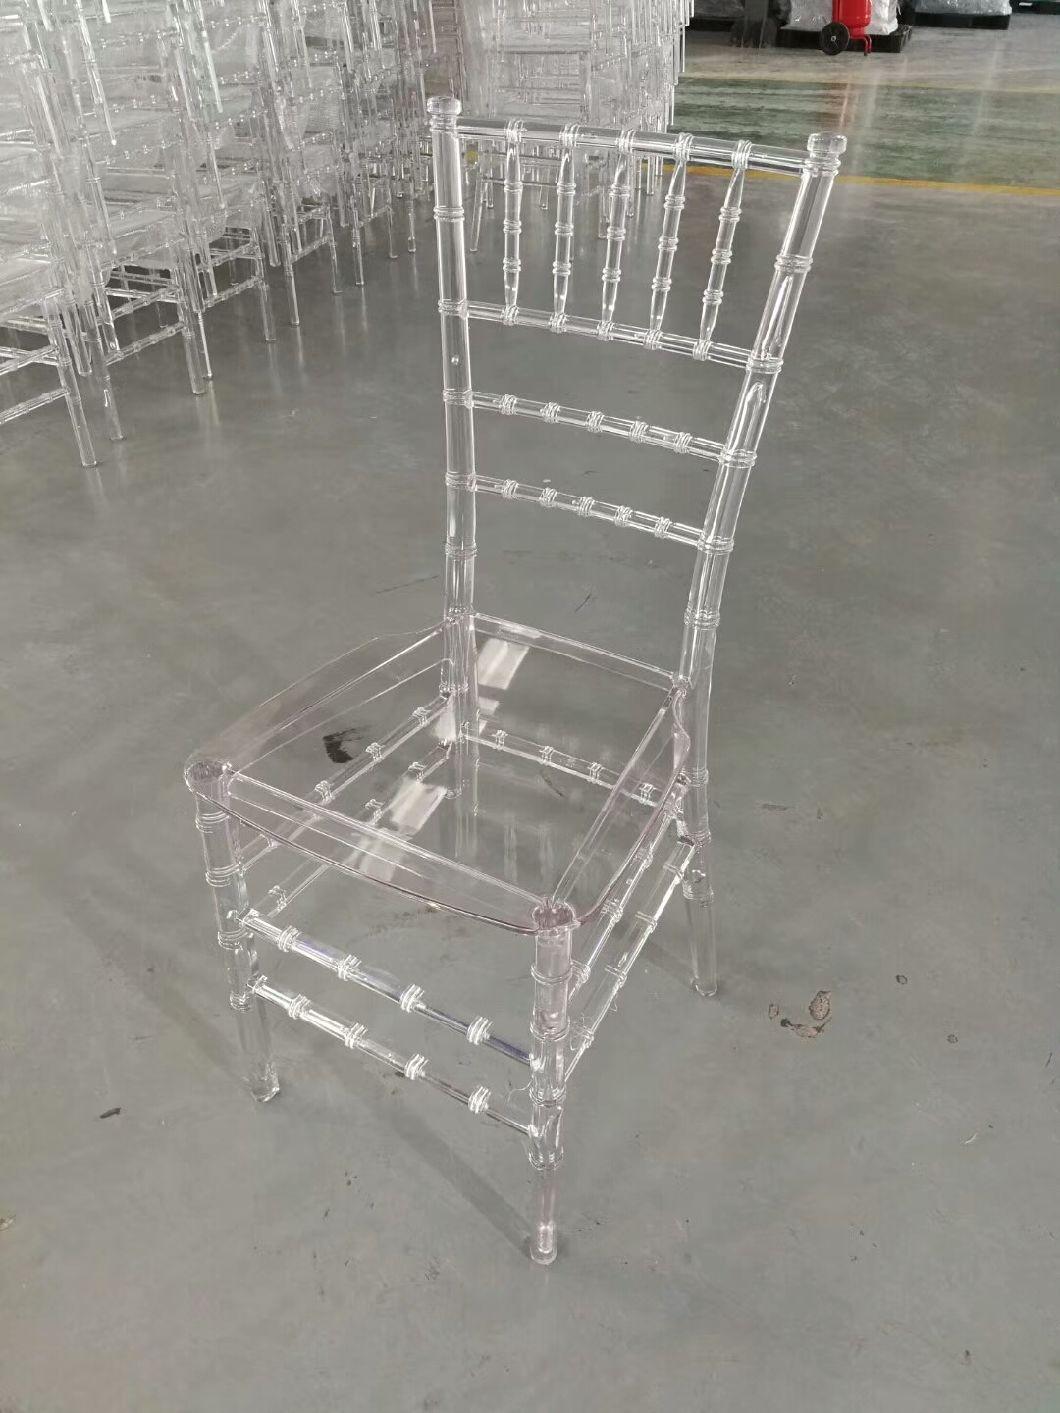 Monoblock Resin Chiavari Chair Without Screws